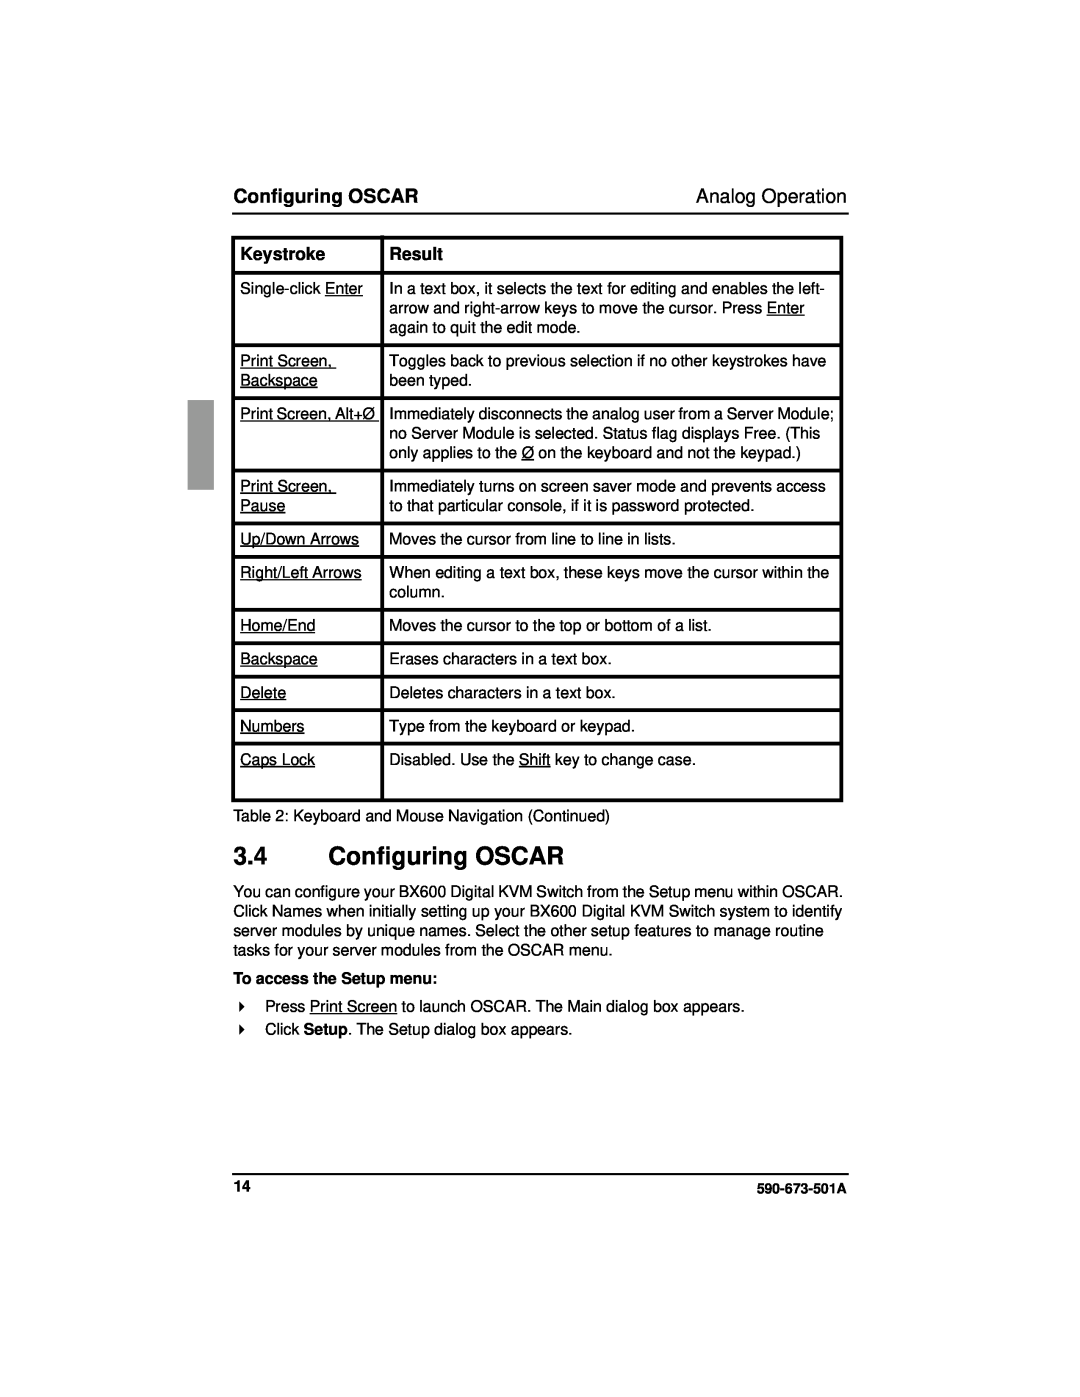 Fujitsu Siemens Computers BX600 manual Configuring OSCAR, To access the Setup menu, Analog Operation, Keystroke, Result 